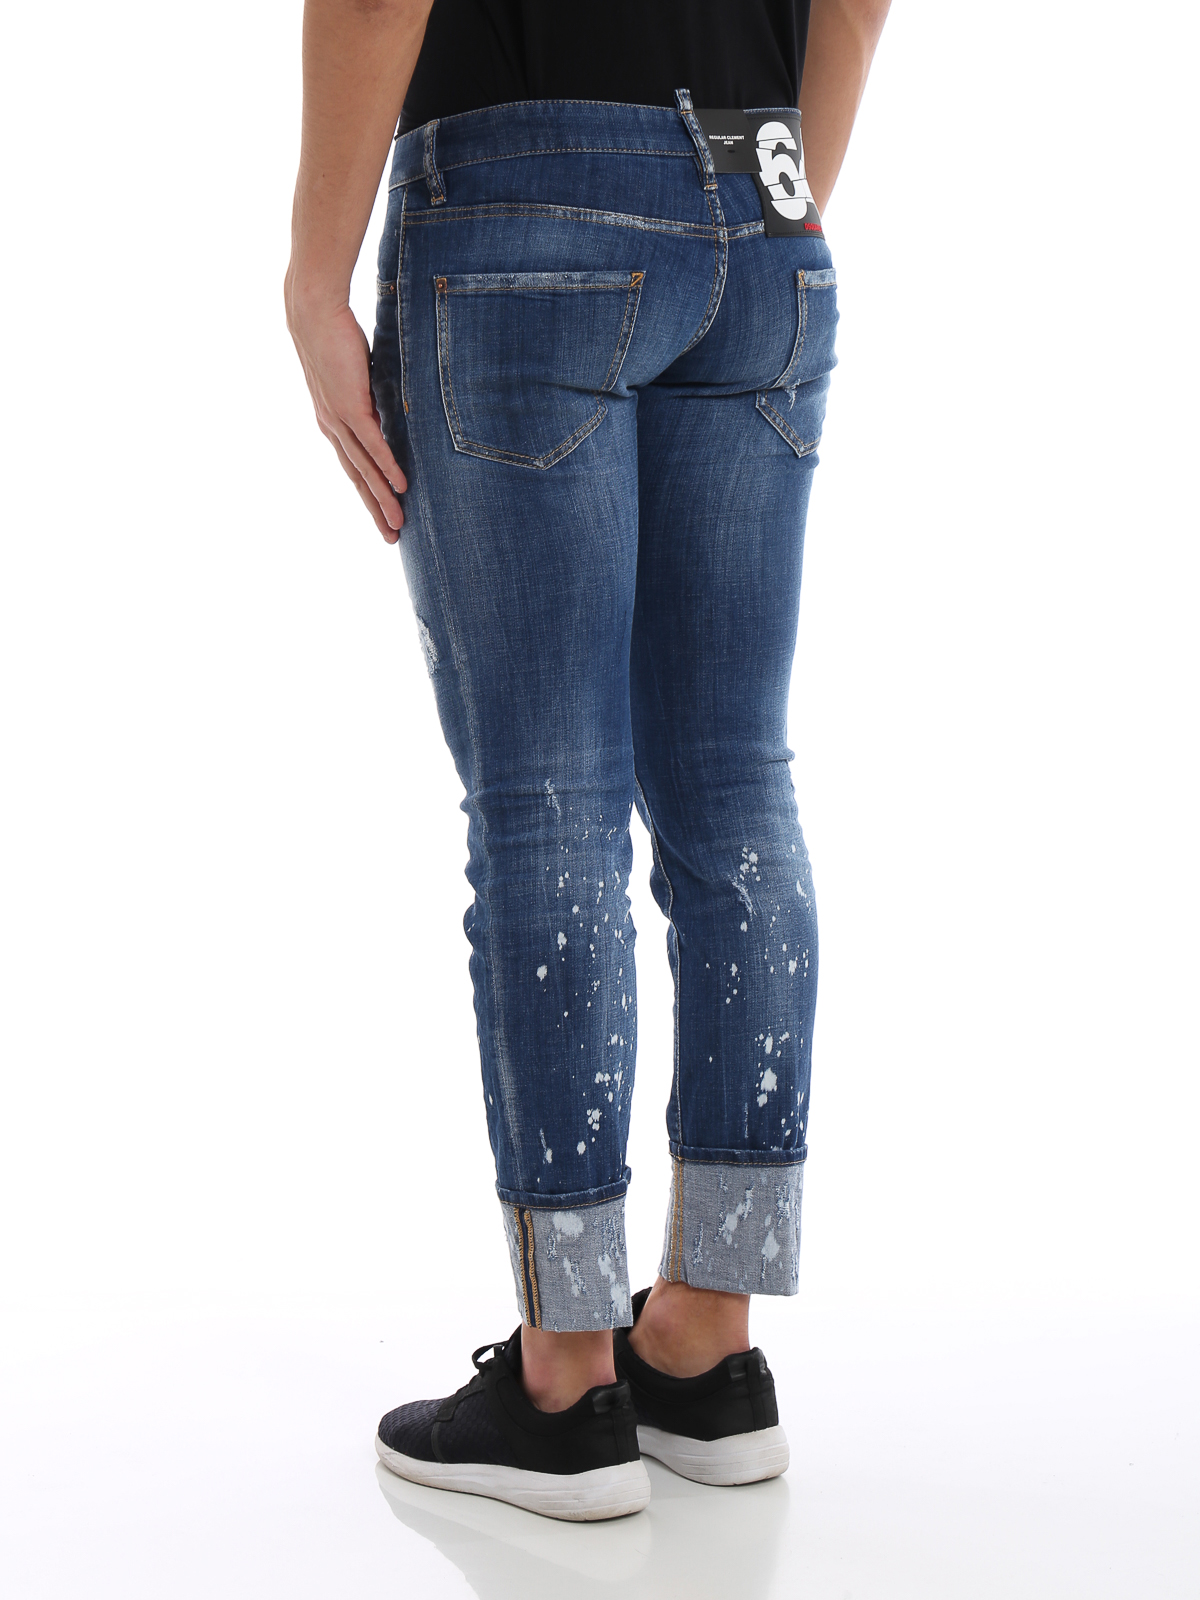 dsquared2 jeans regular